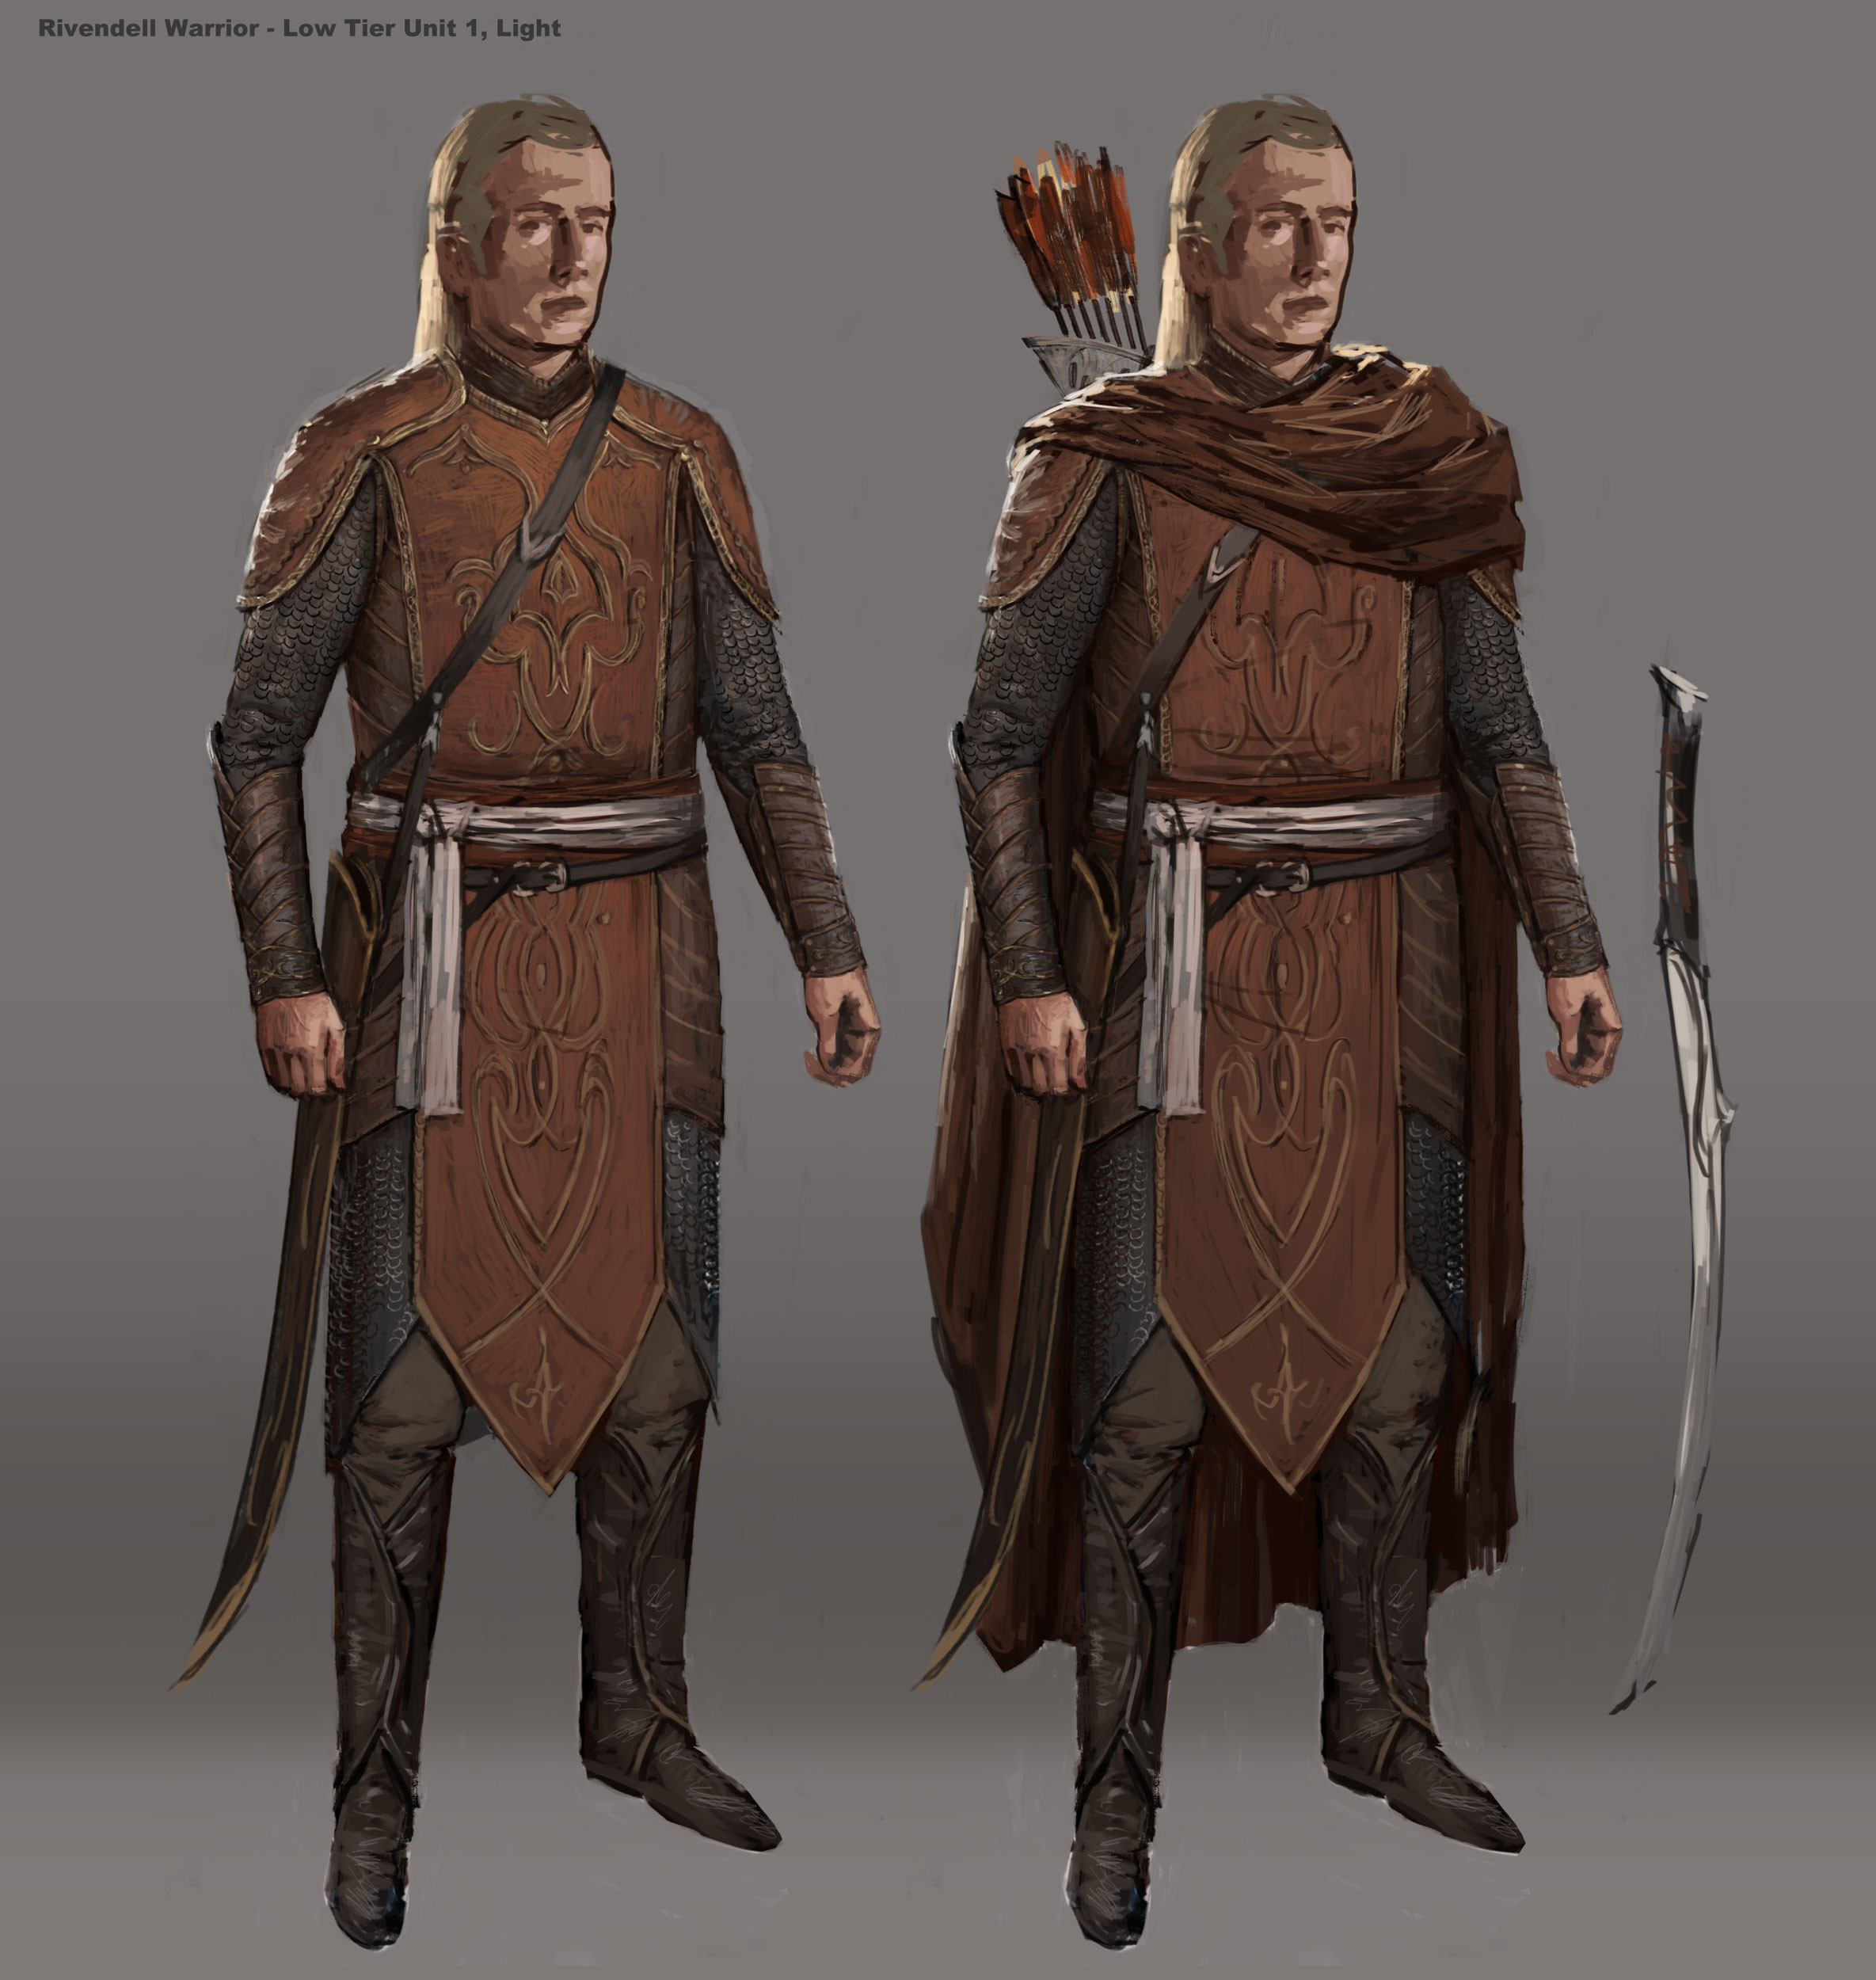 Rivendell warrior, lower tier unit. 
Original concept.